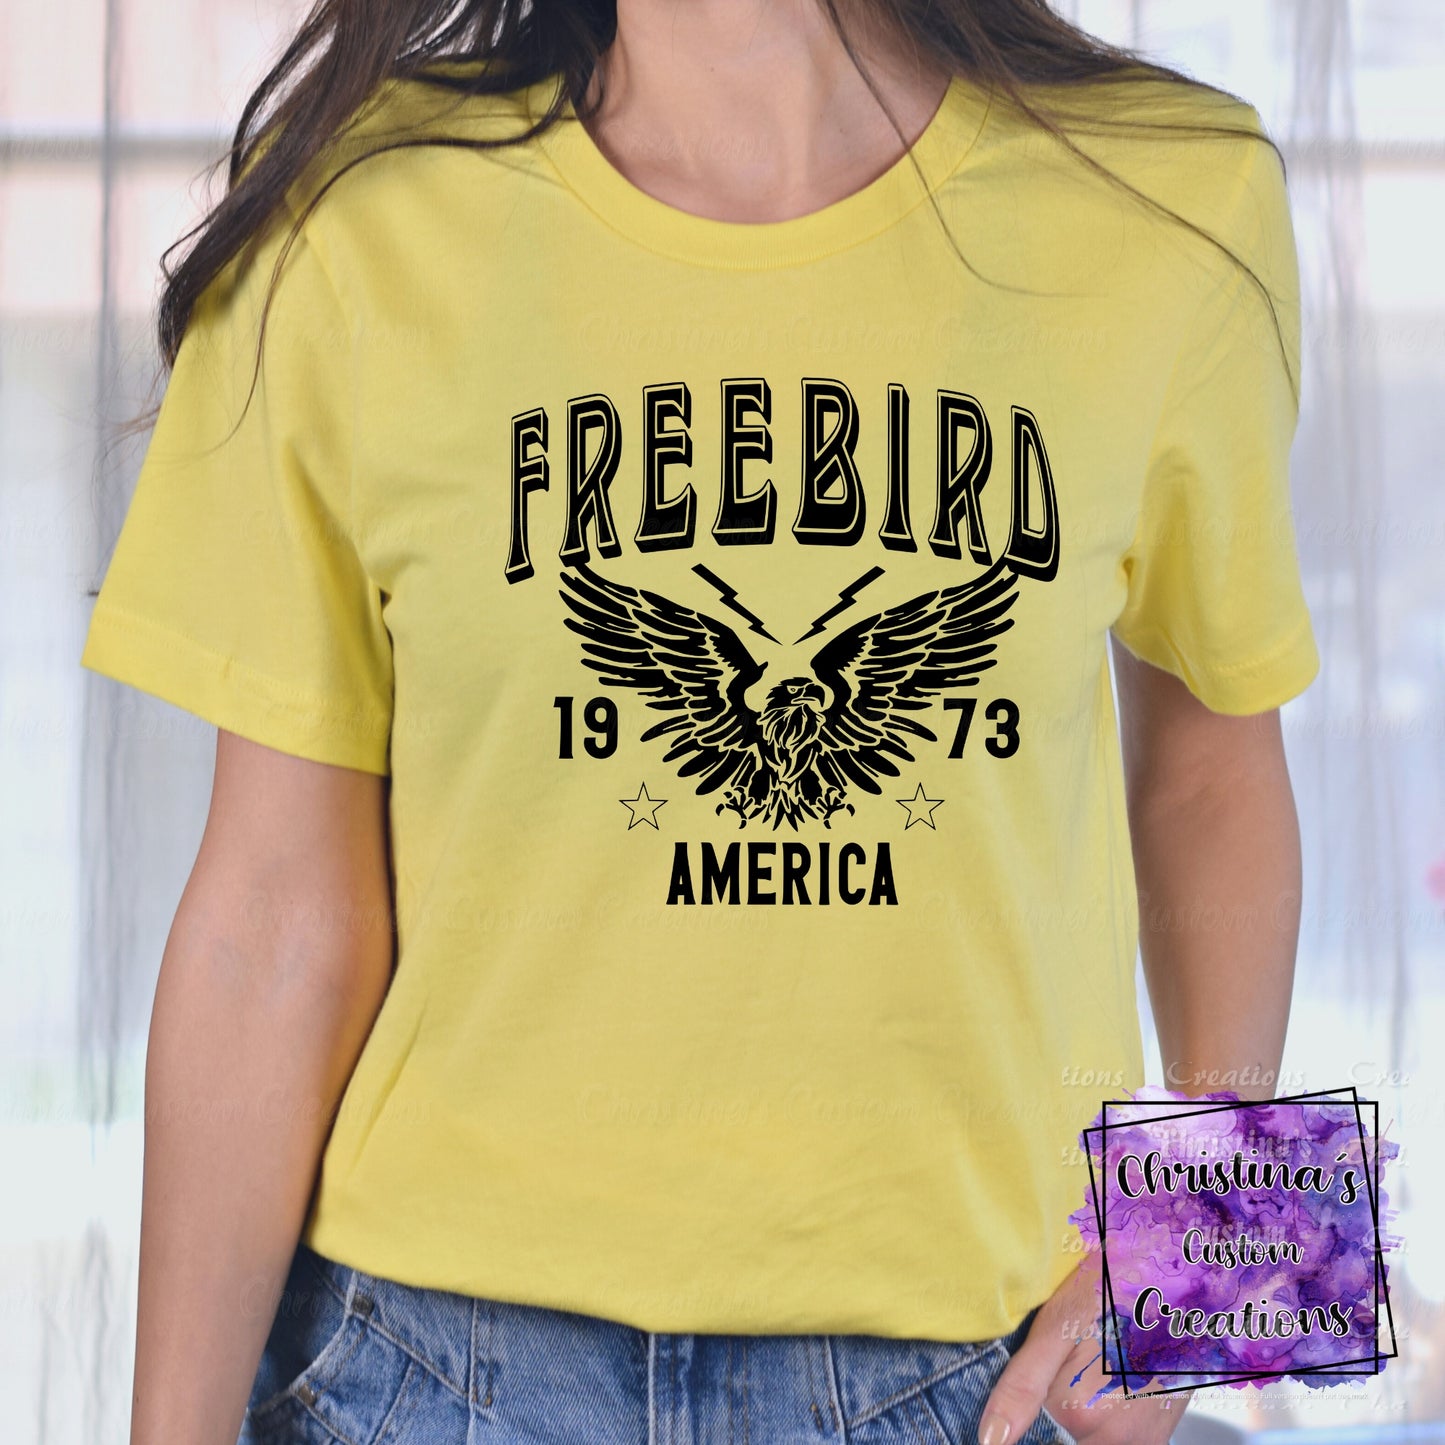 Free Bird T-Shirt | Trendy Rock Music Shirt | Fast Shipping | Super Soft Shirts for Men/Women/Kid's